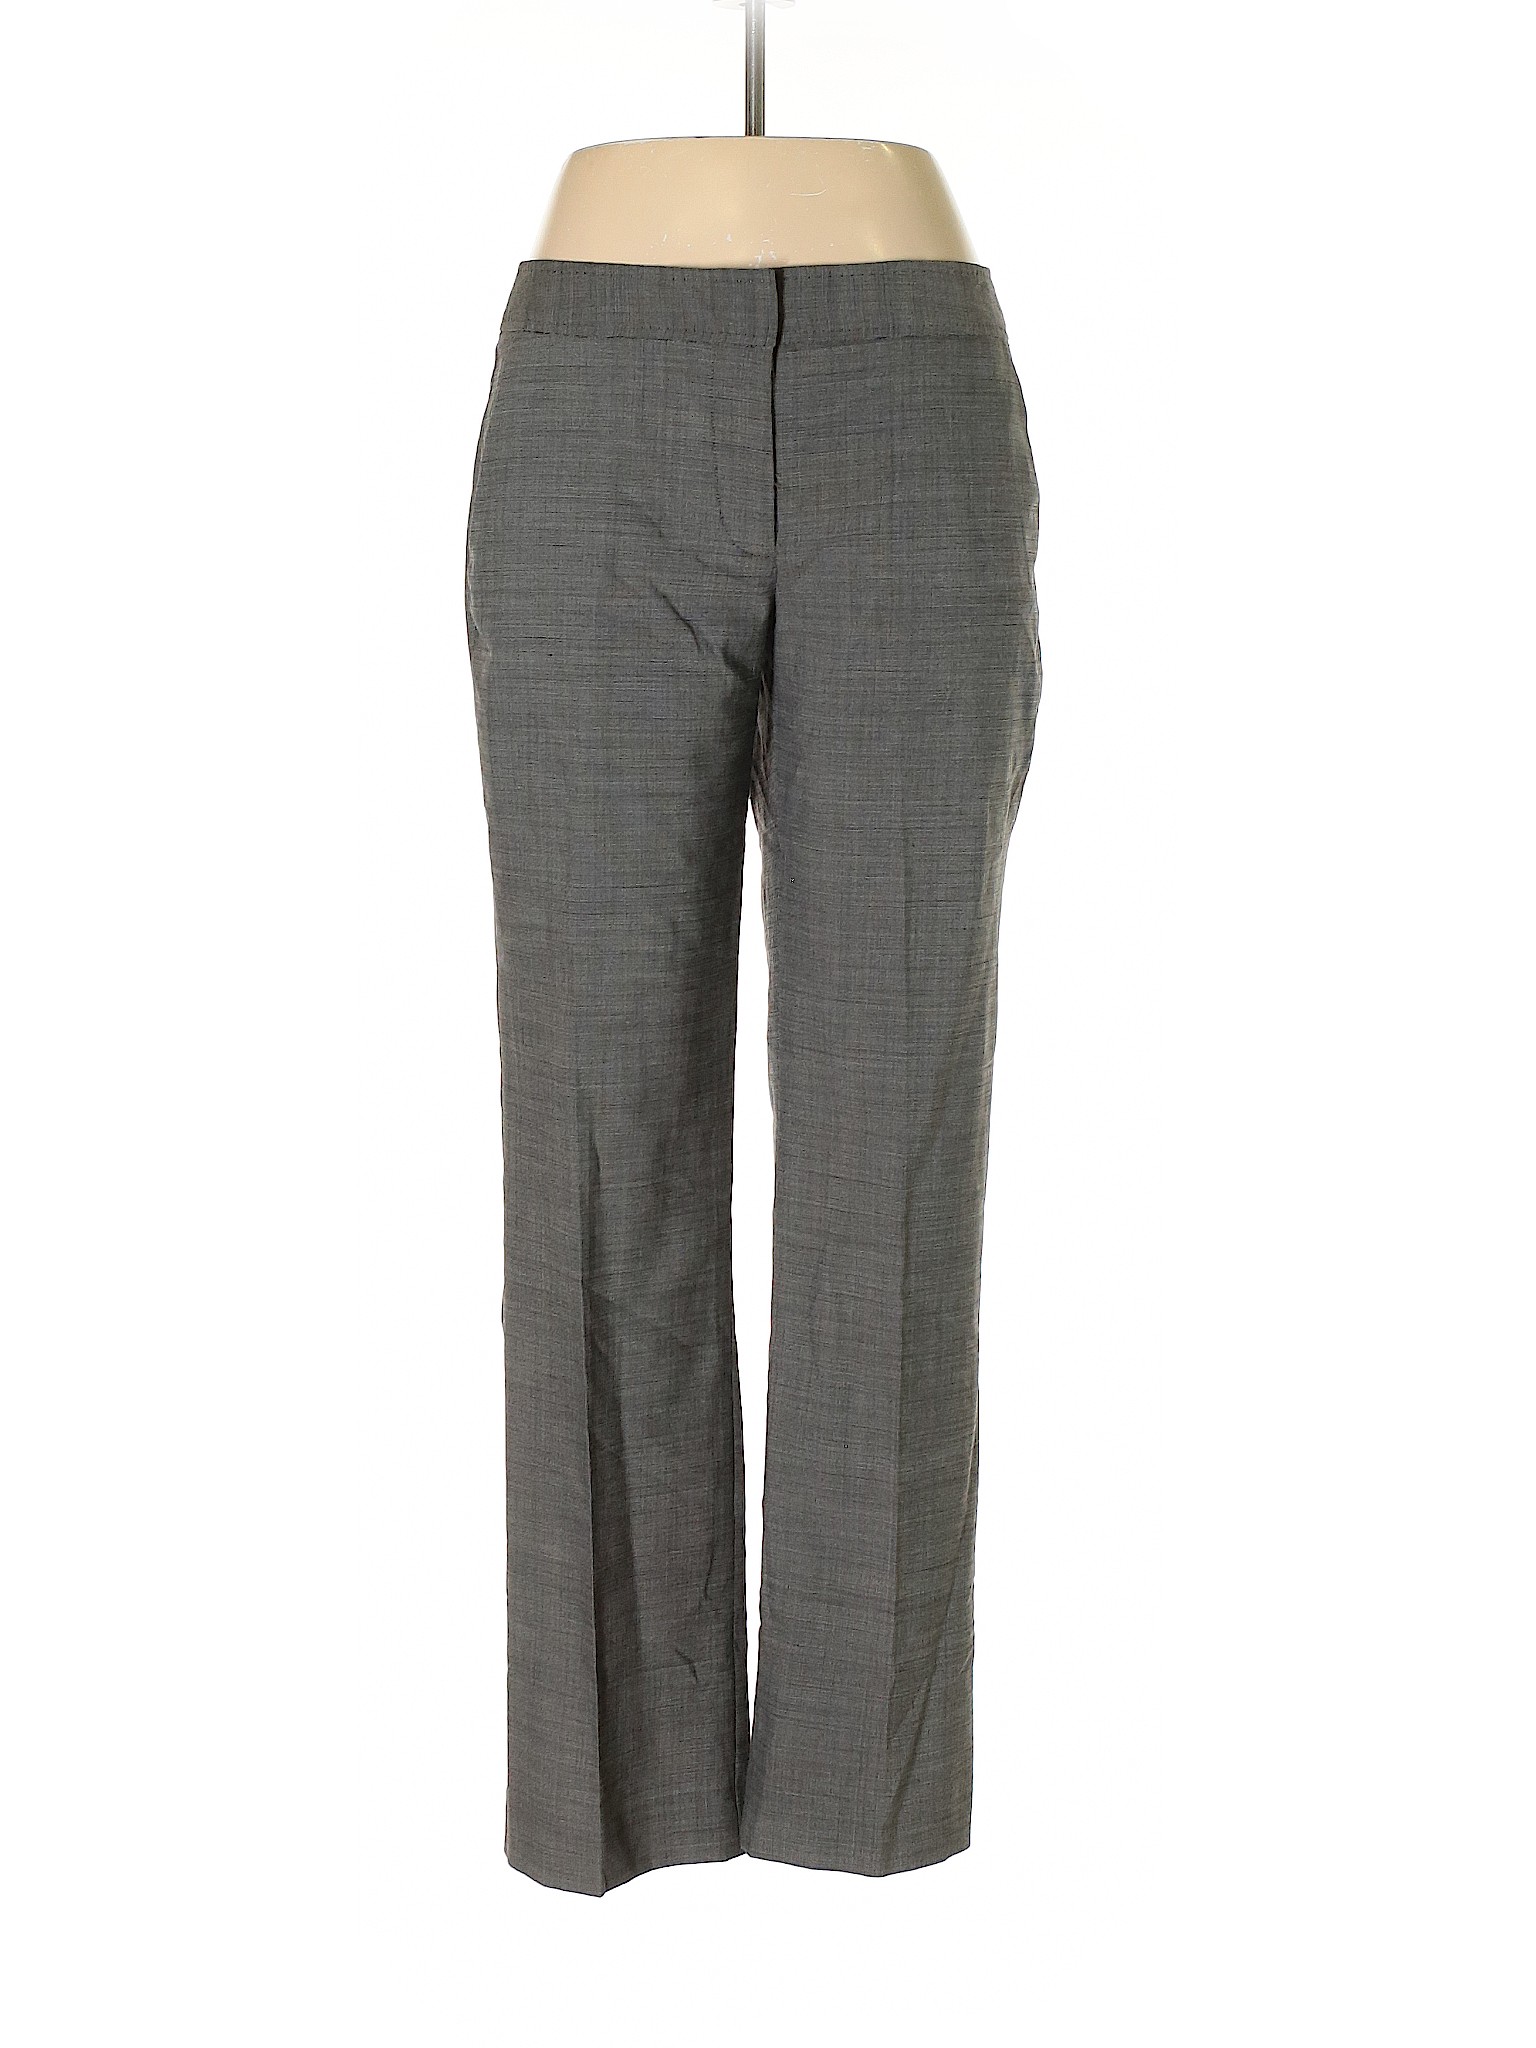 Talbots Women Gray Dress Pants 8 | eBay